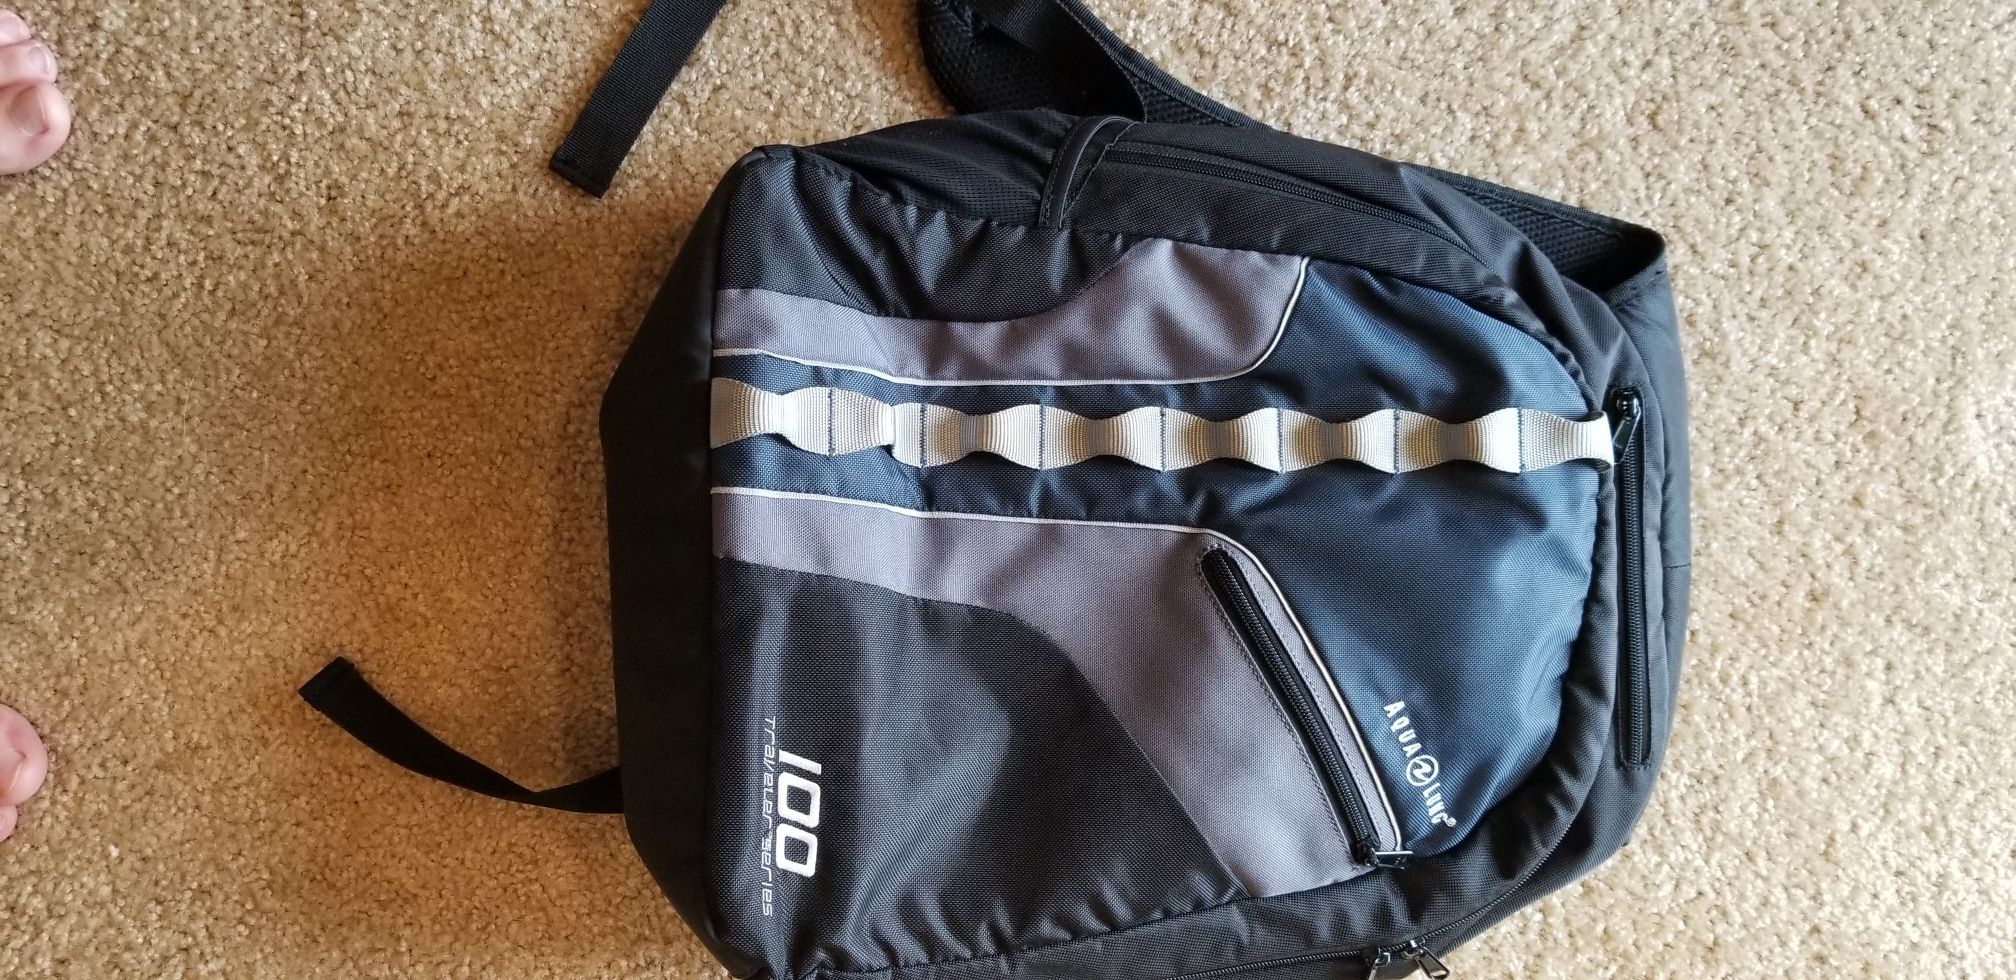 Aqualung backpack